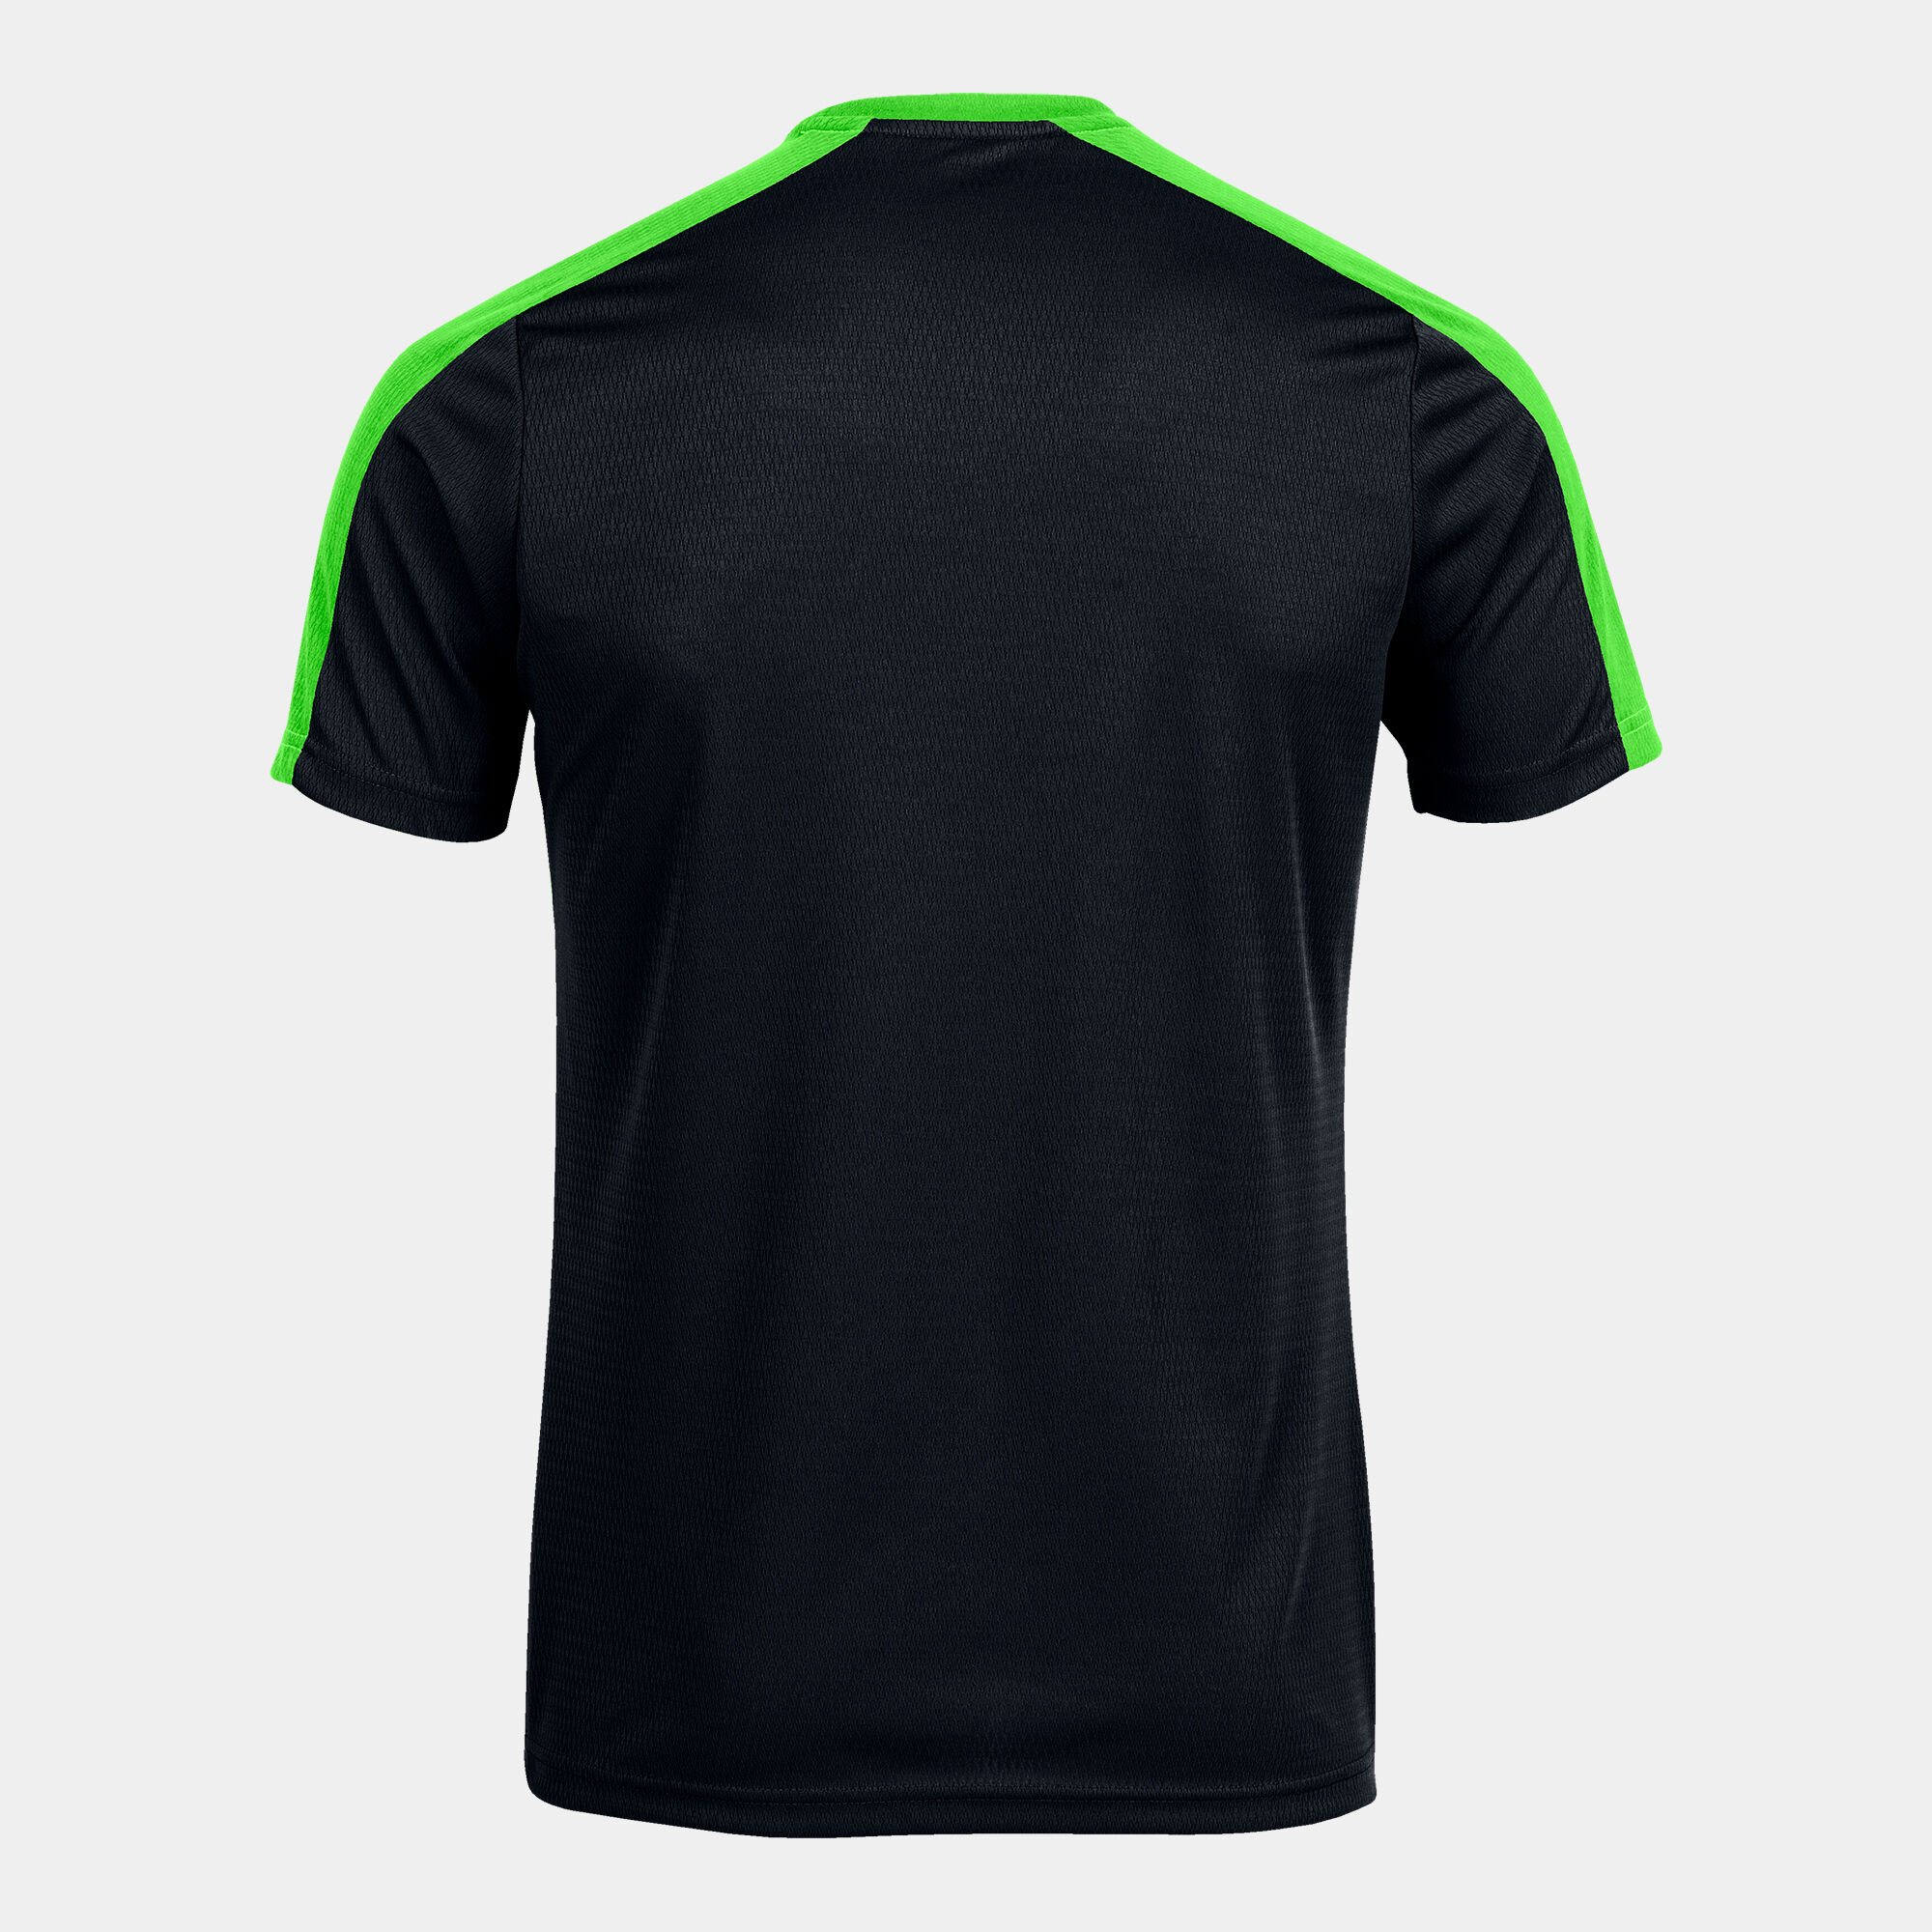 Camiseta manga corta hombre Eco Championship negro verde flúor